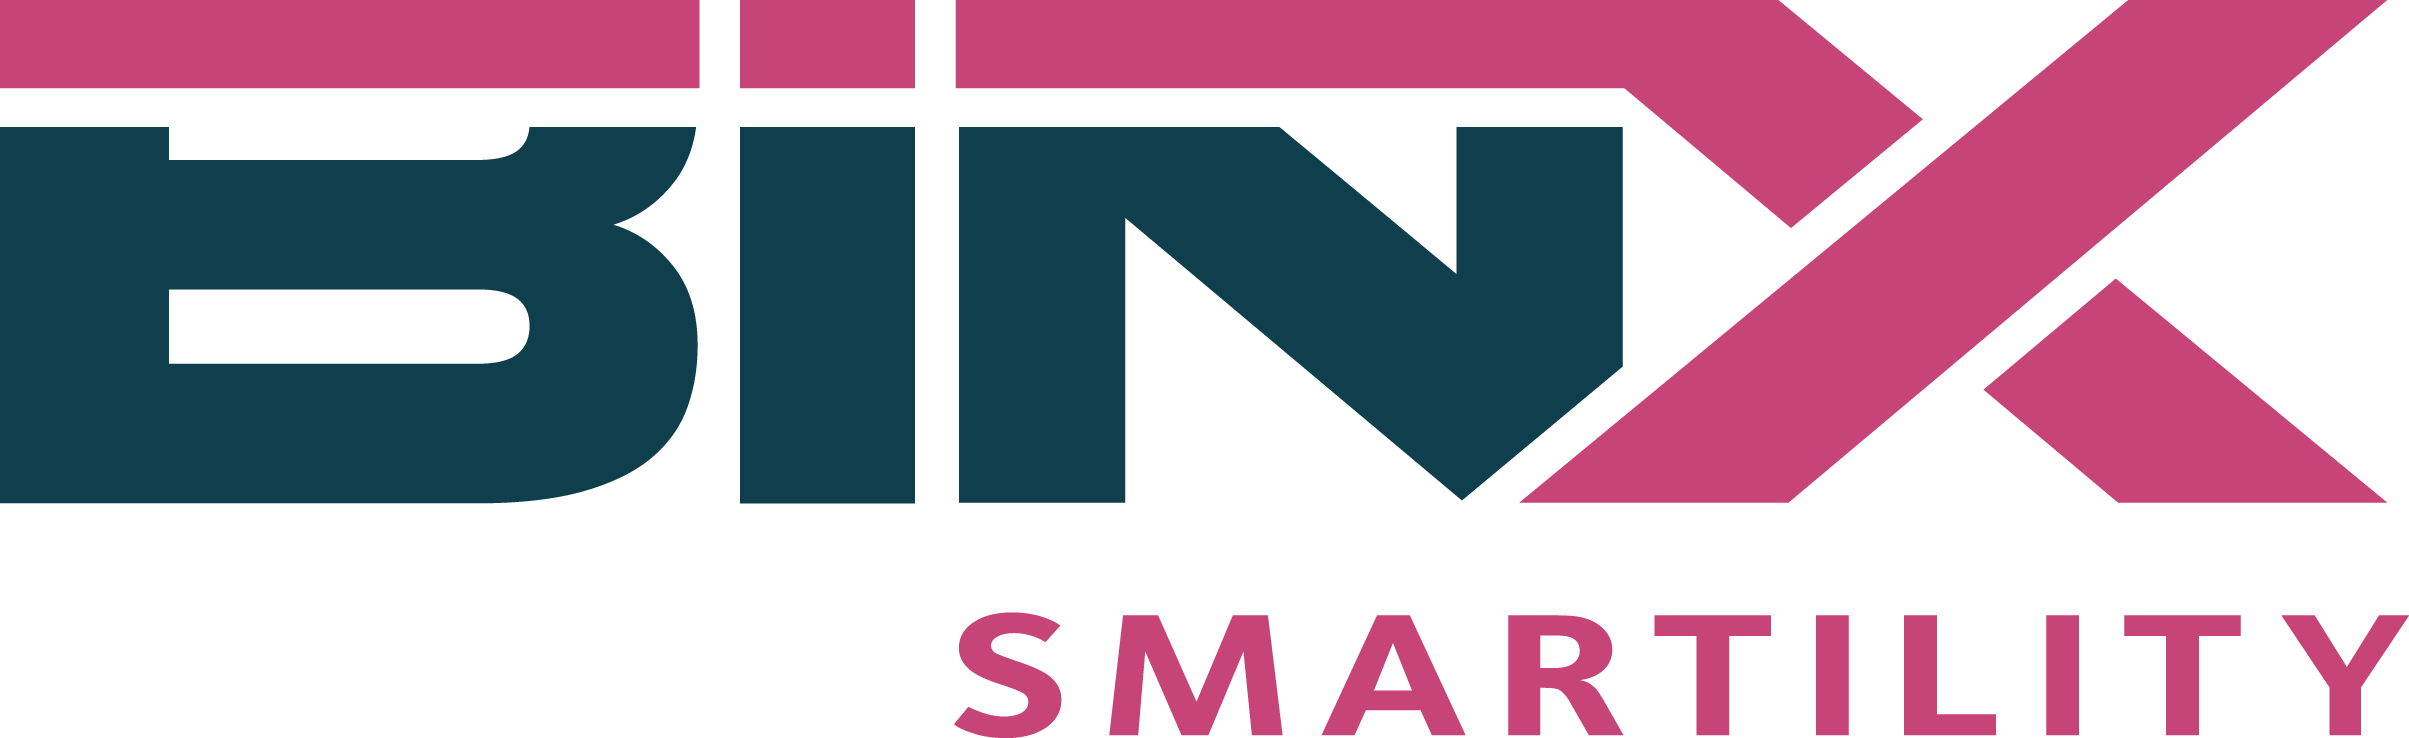 Binx Smartility